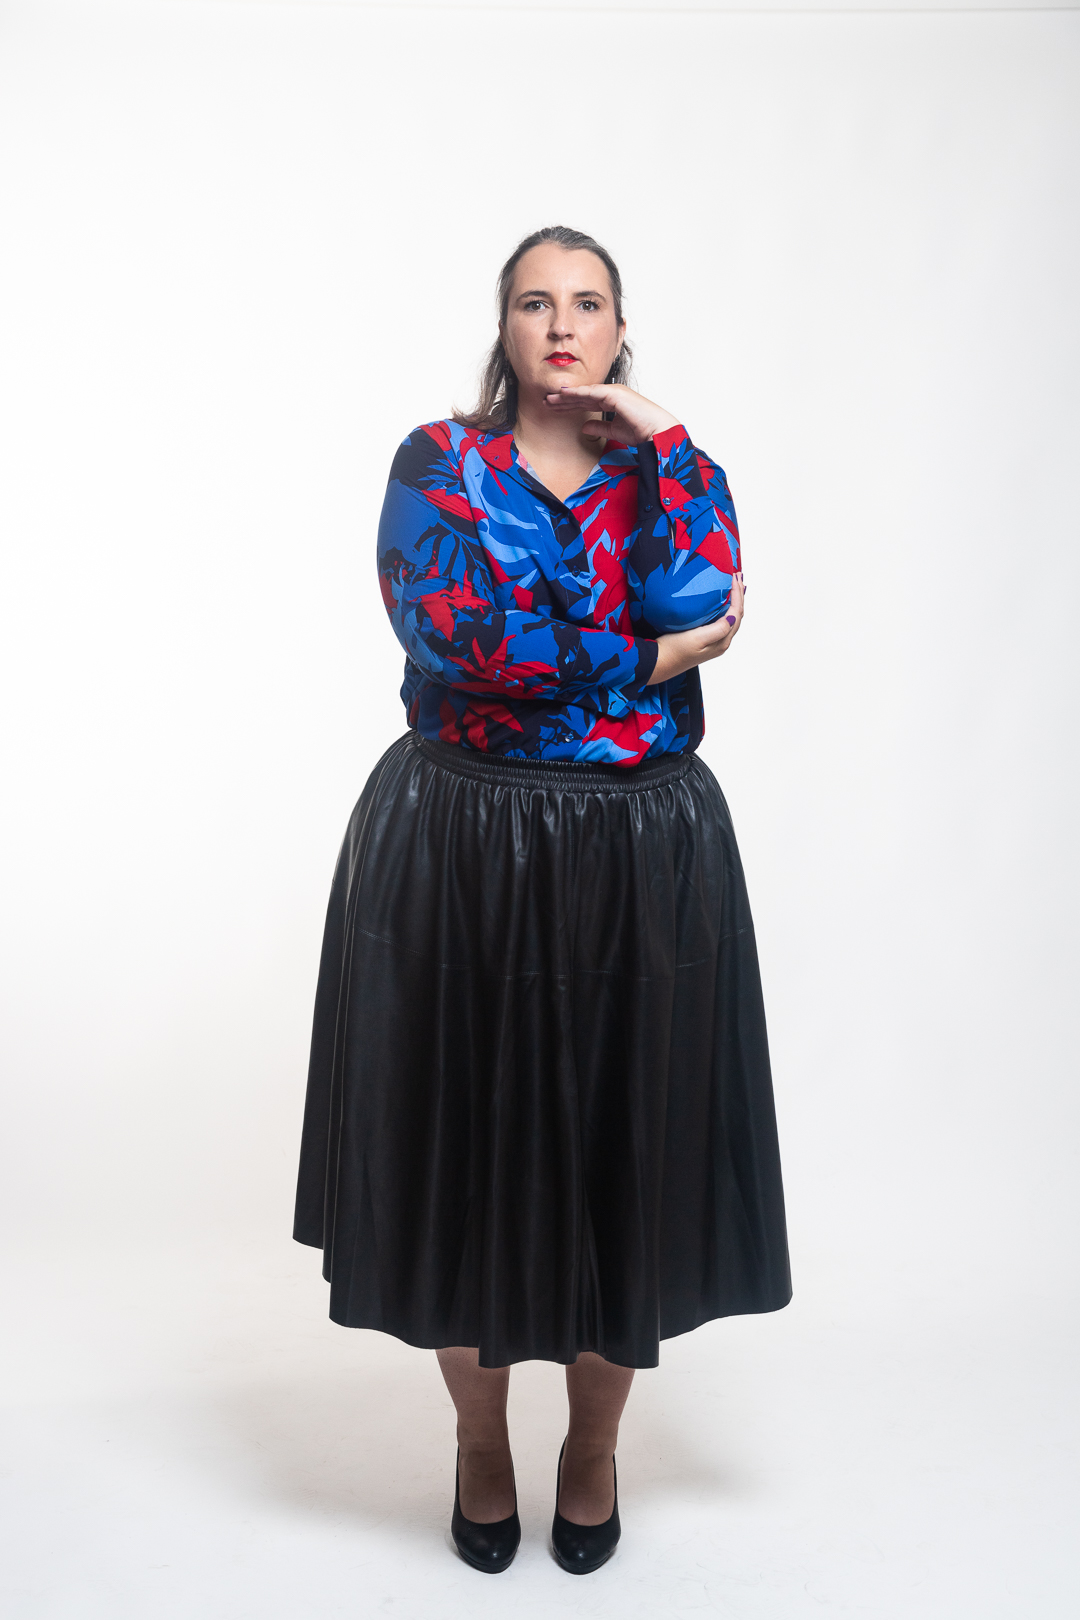 Dress Up Online styling traject voor power vrouwen Sofie Lambrecht - kleuranalyse stijlanalyse kledingadvies